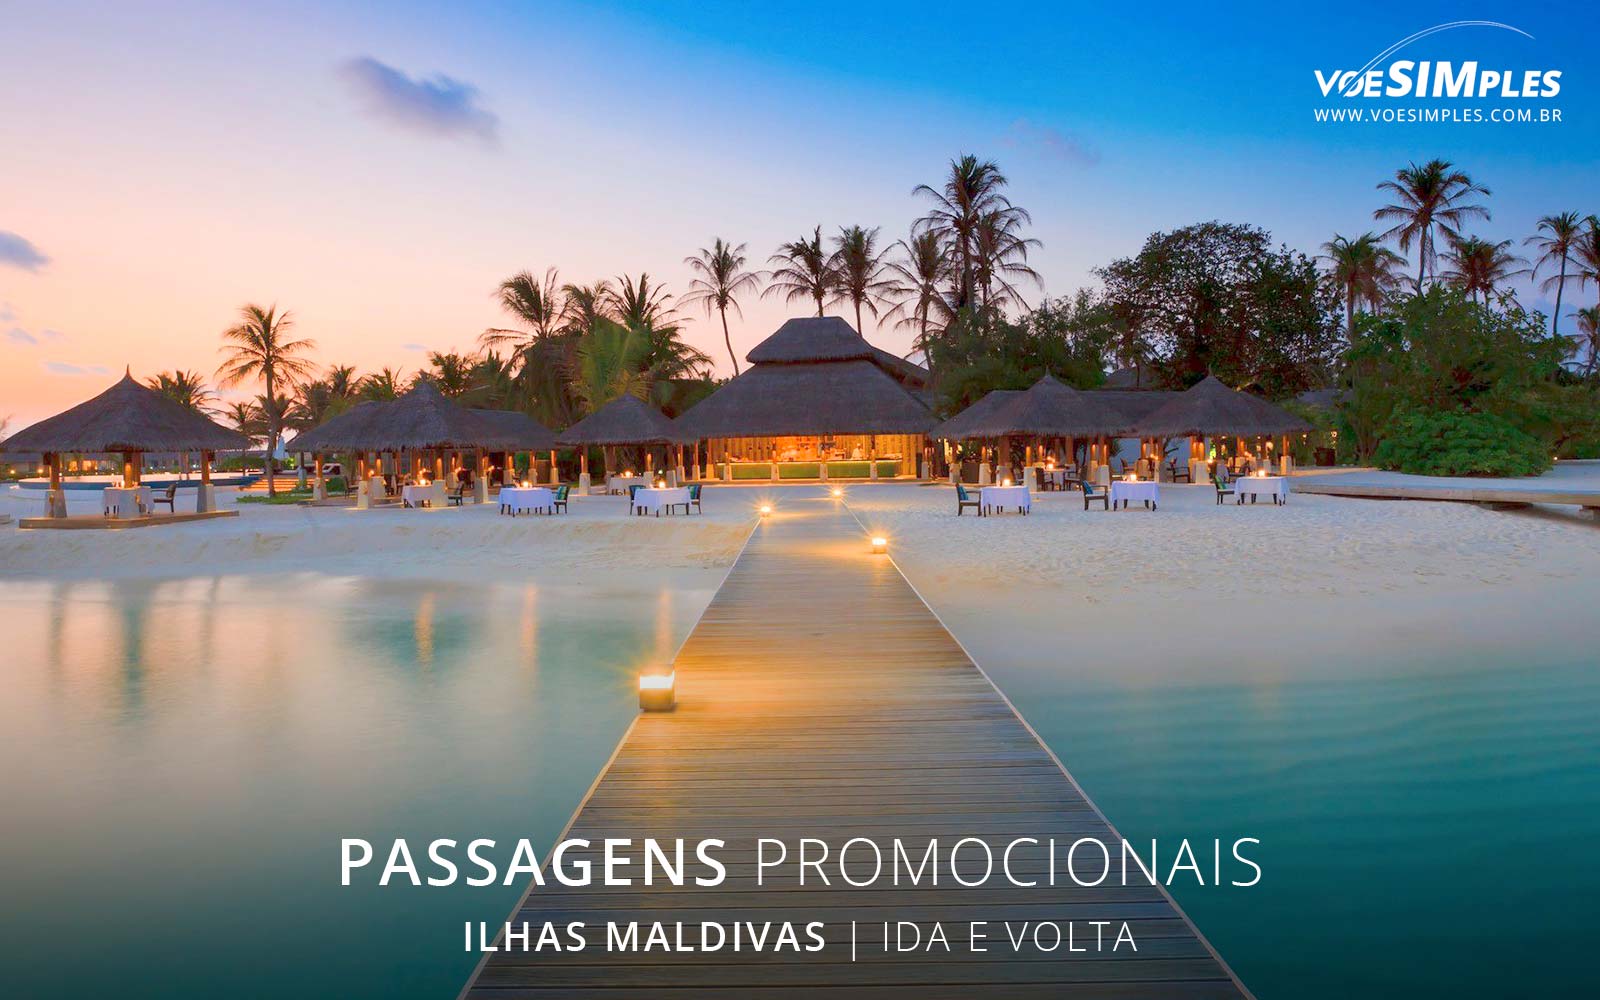 passagens-aereas-baratas-ilha-maldivas-continente-voe-simples-passages-aereas-promocionais-maldivas-passagens-promo-ilha